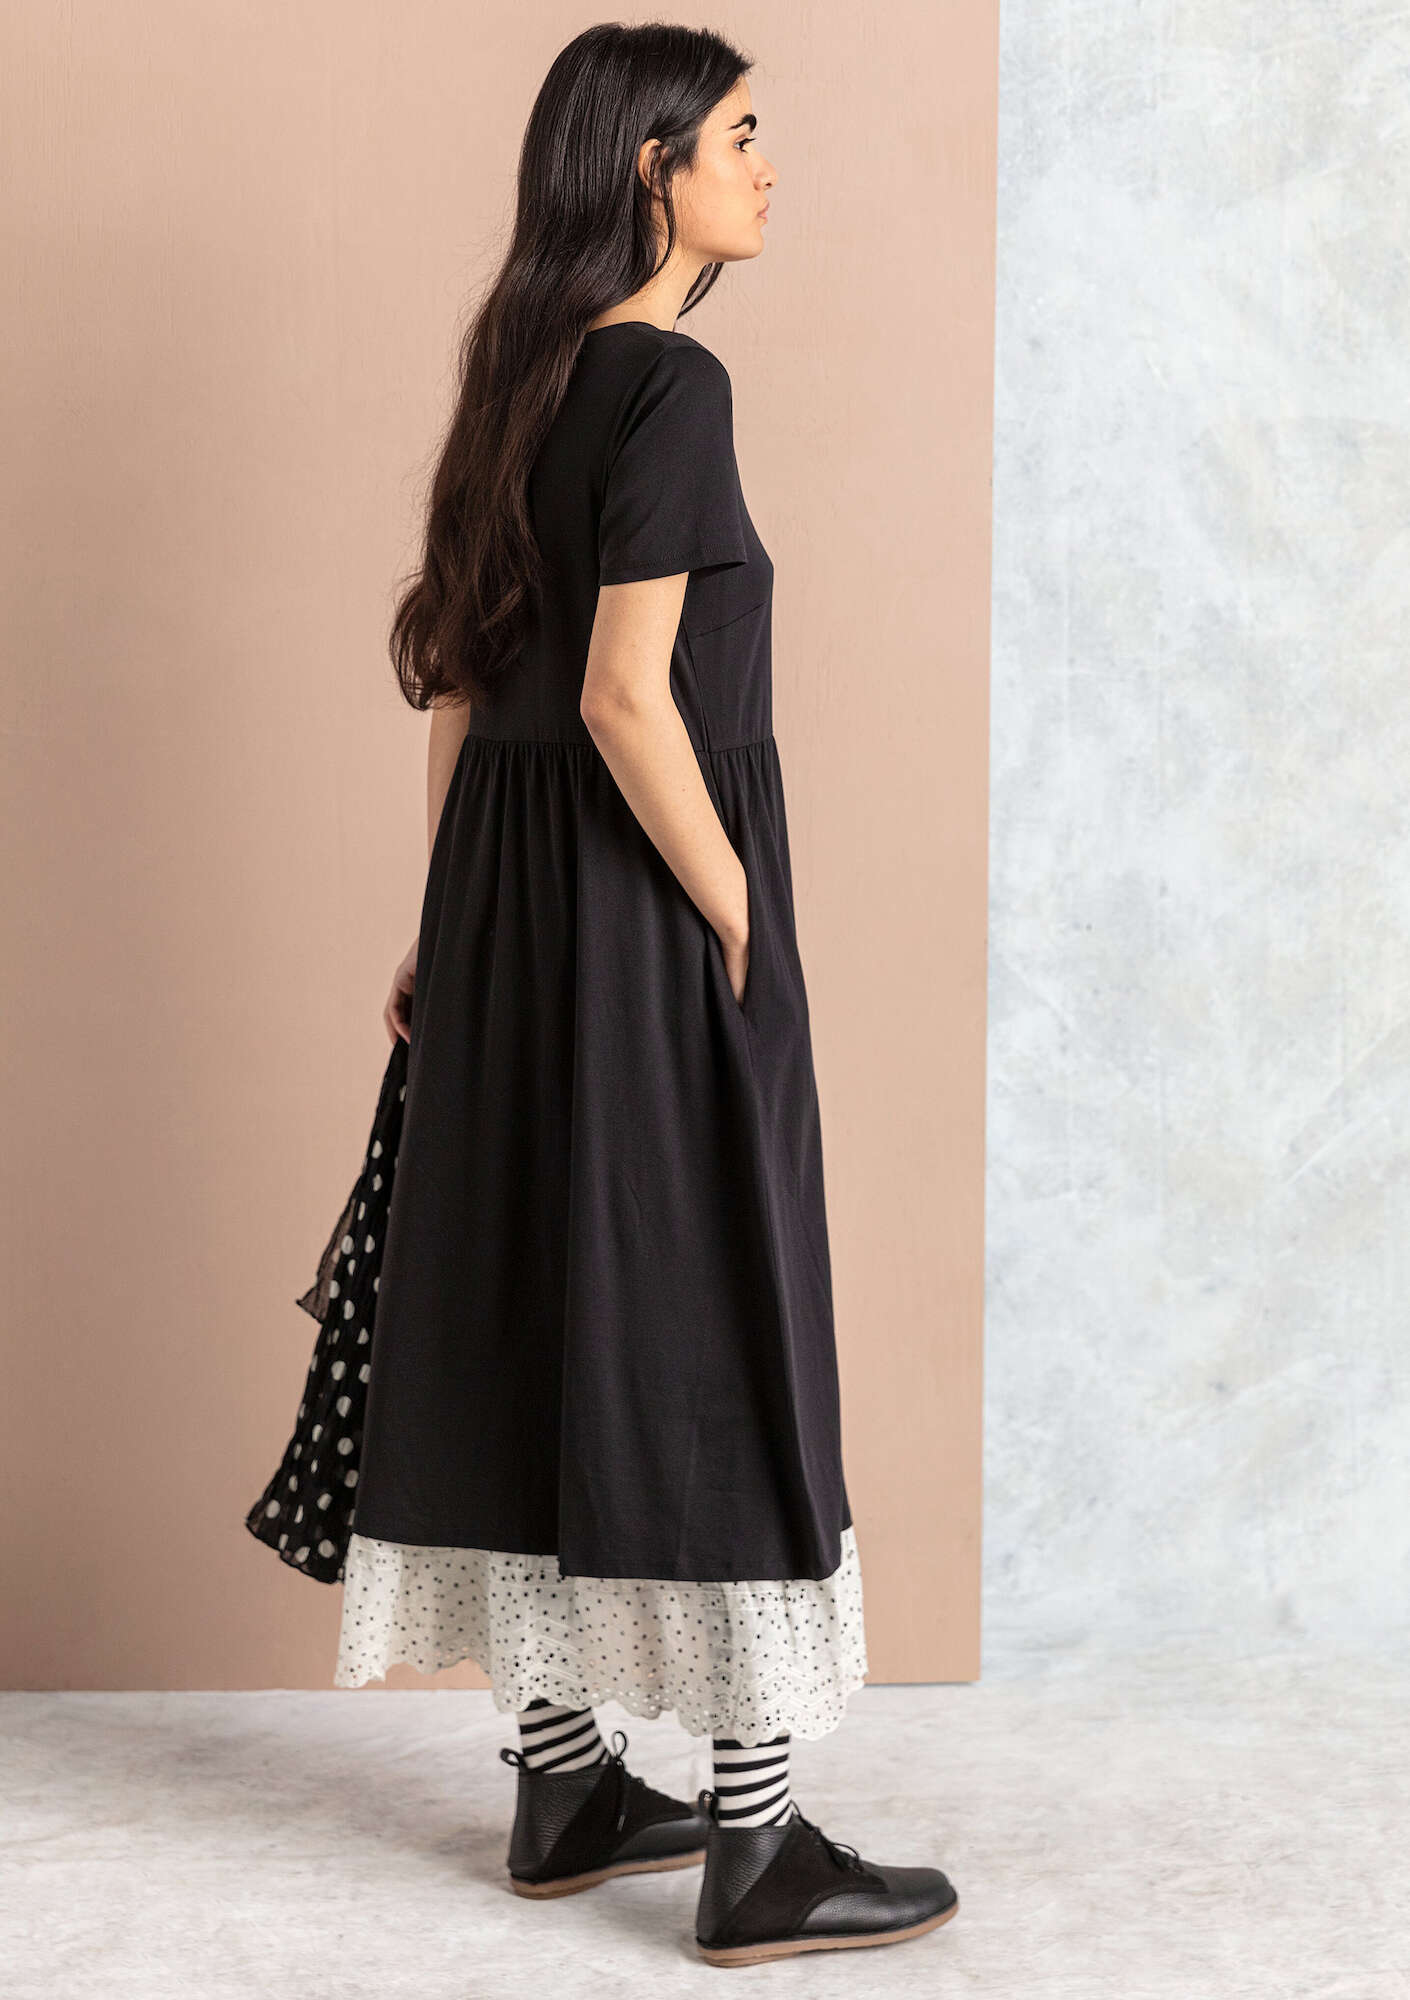 “Isolde” jersey dress in organic cotton/modal black